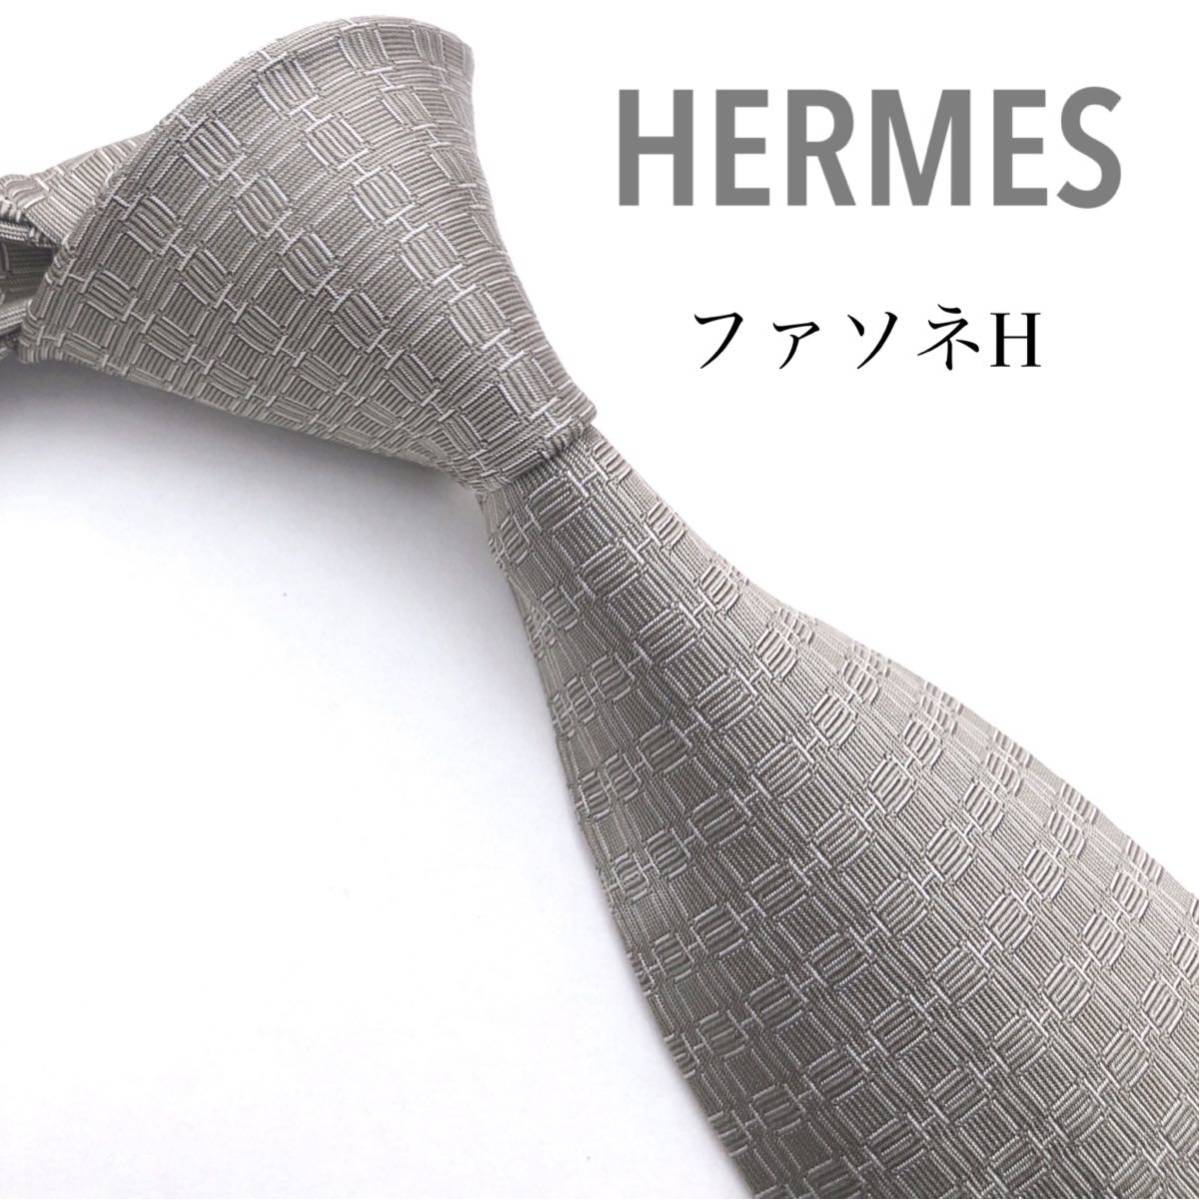 HERMES エルメス 美品 ネクタイ 最高級シルク ファソネH H織 ロゴ 灰